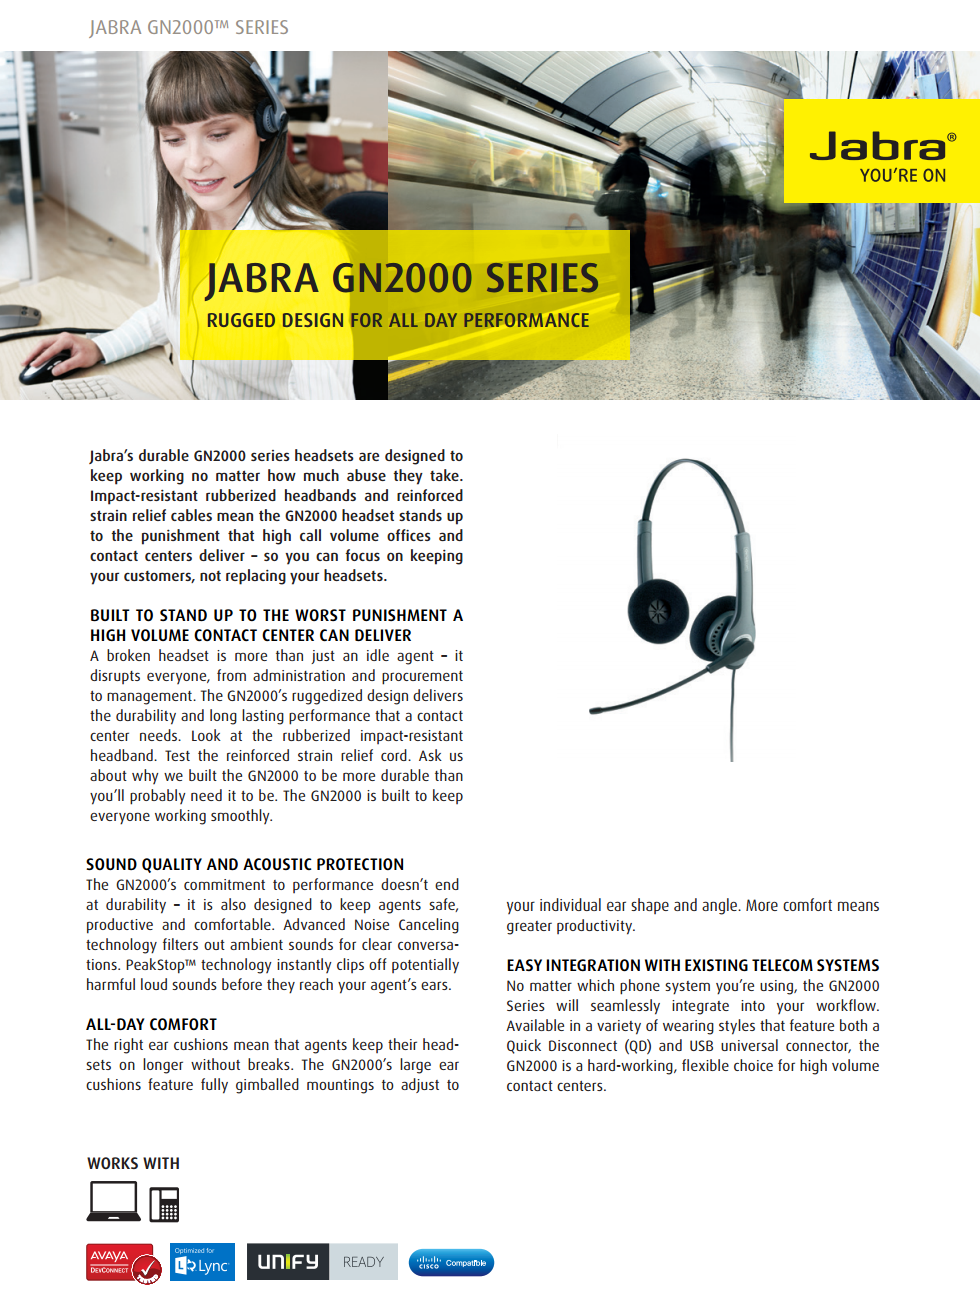 Acheter Micro-casque filaire Jabra GN2000 DUO Noise Canceling Narrow Band (QD) Maroc